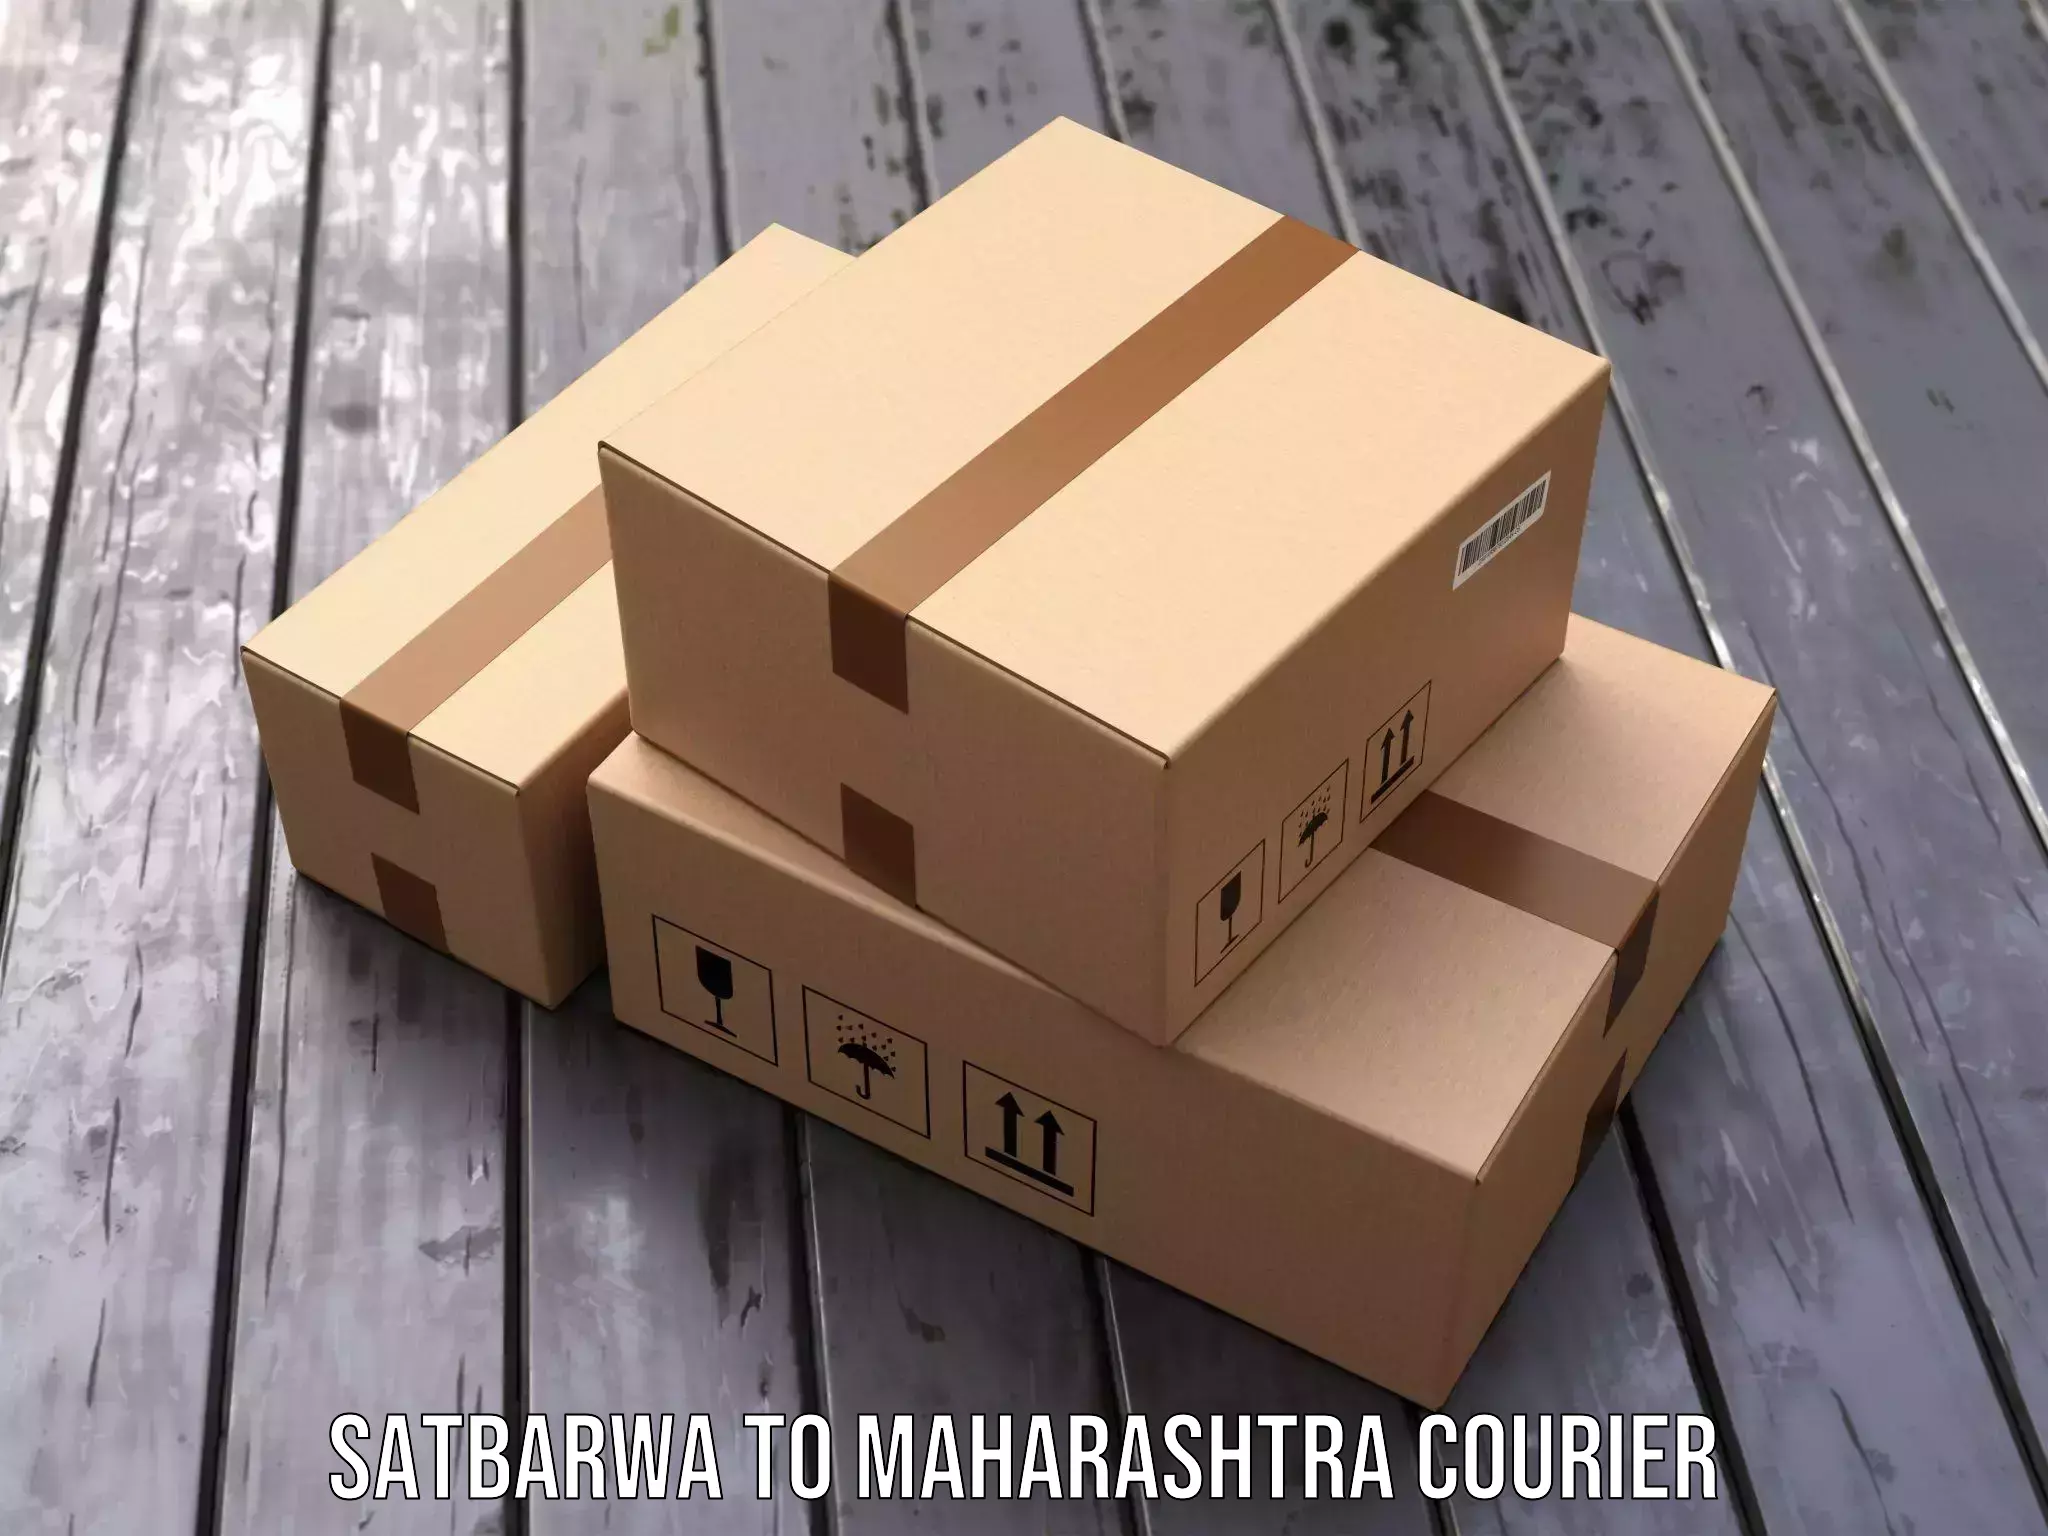 Courier service comparison Satbarwa to Alephata